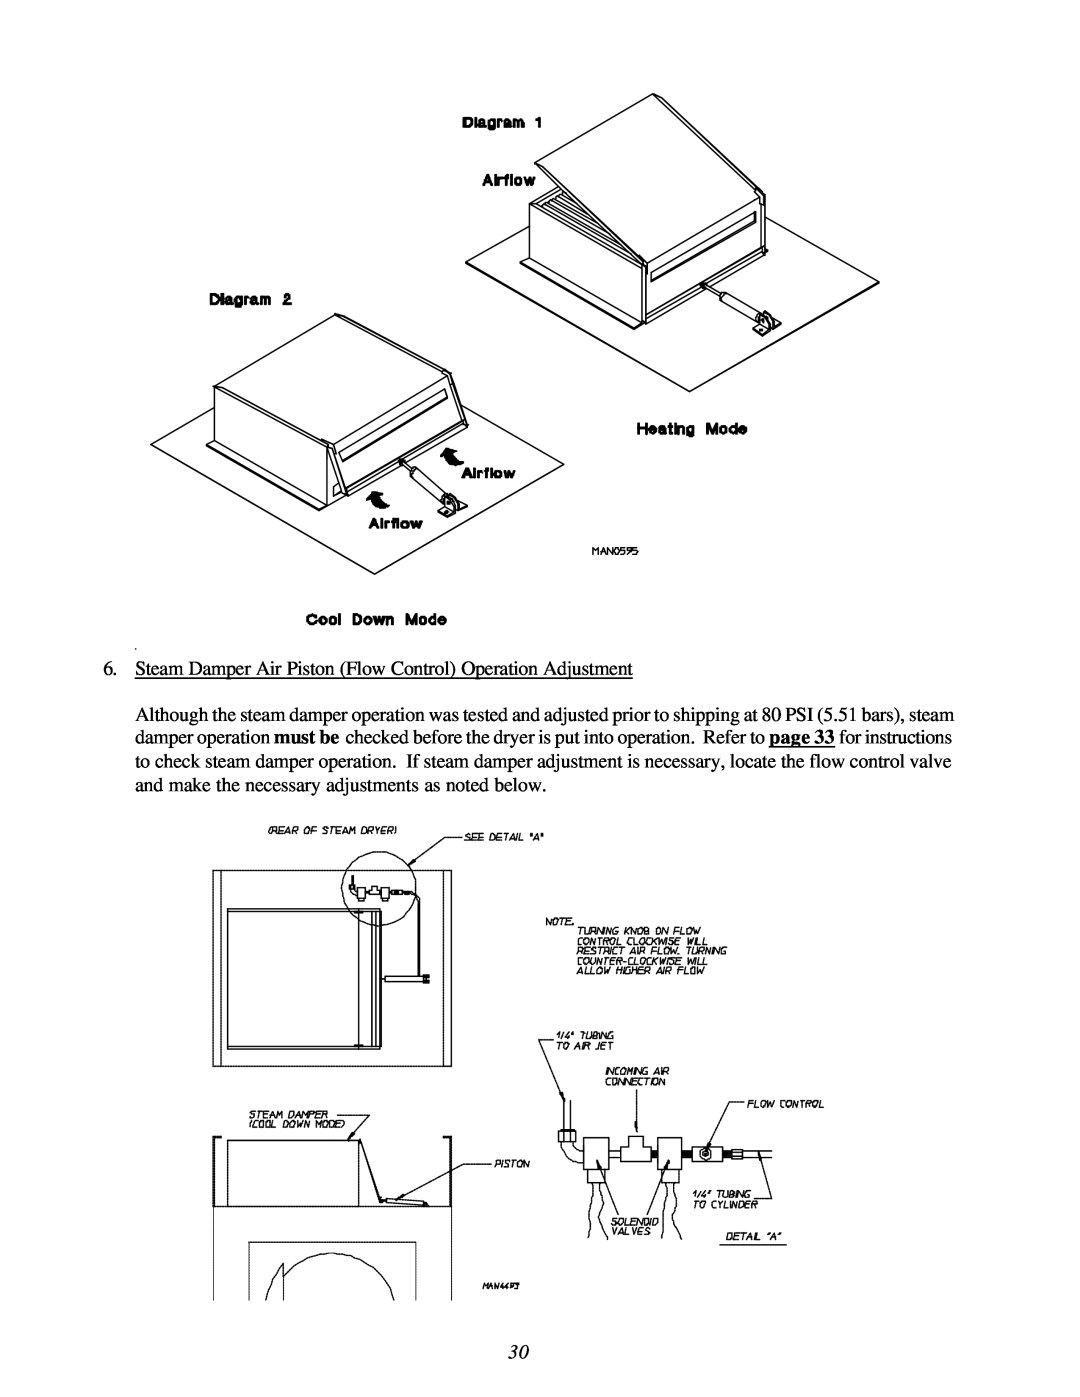 American Dryer Corp ML-122D installation manual Steam Damper Air Piston Flow Control Operation Adjustment 